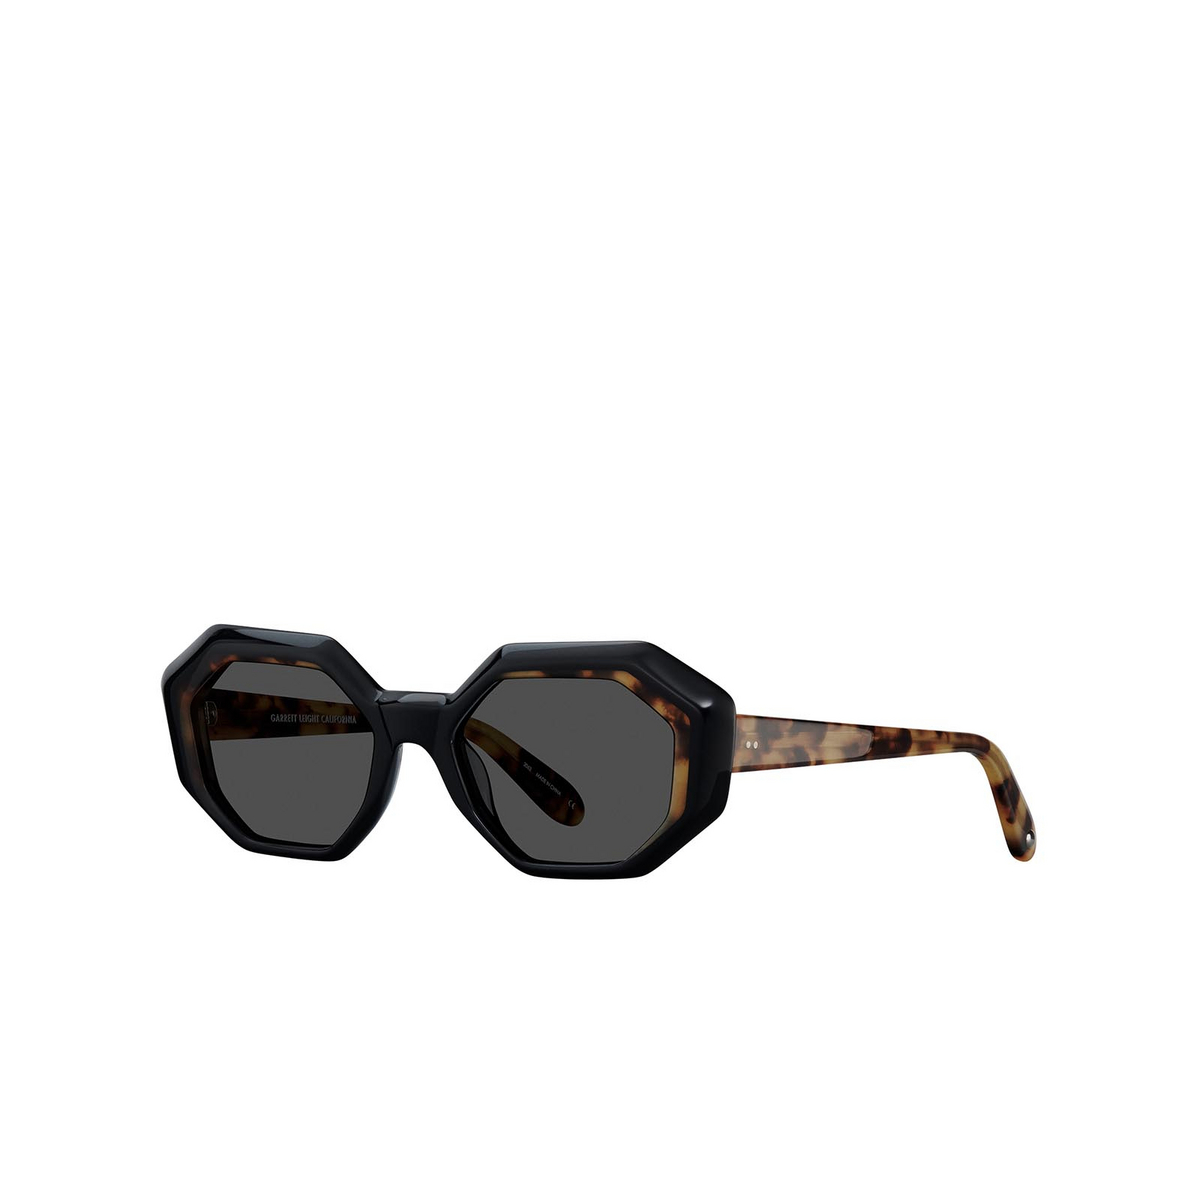 Garrett Leight JACQUELINE Sunglasses BK-DKT/SFBK Black-Dark Tortoise - three-quarters view